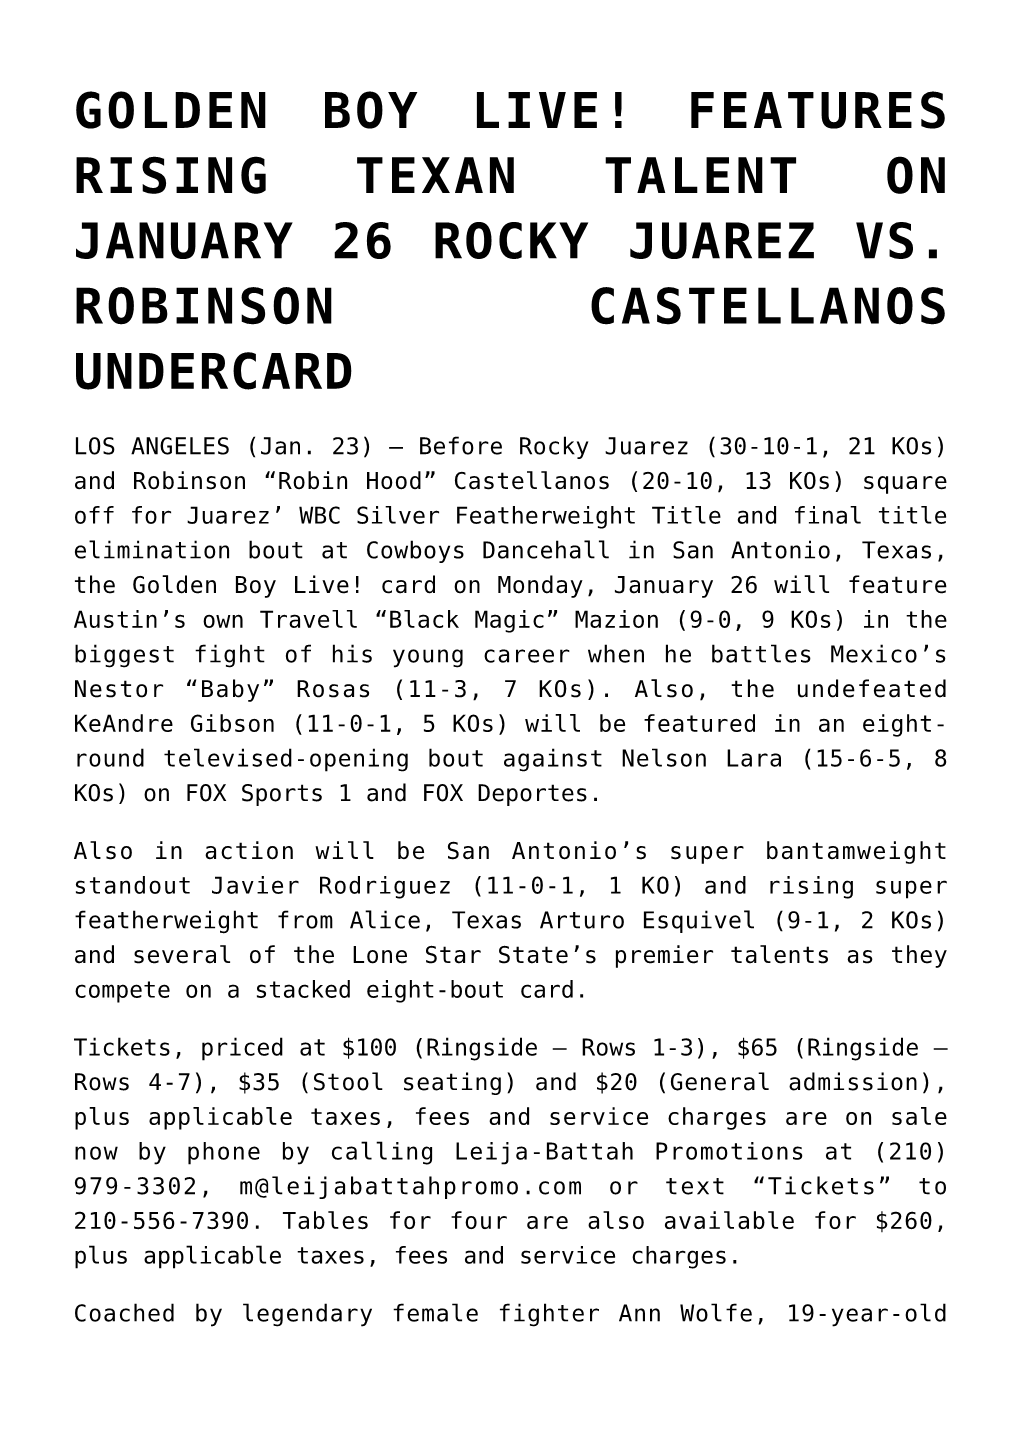 Golden Boy Live! Features Rising Texan Talent on January 26 Rocky Juarez Vs